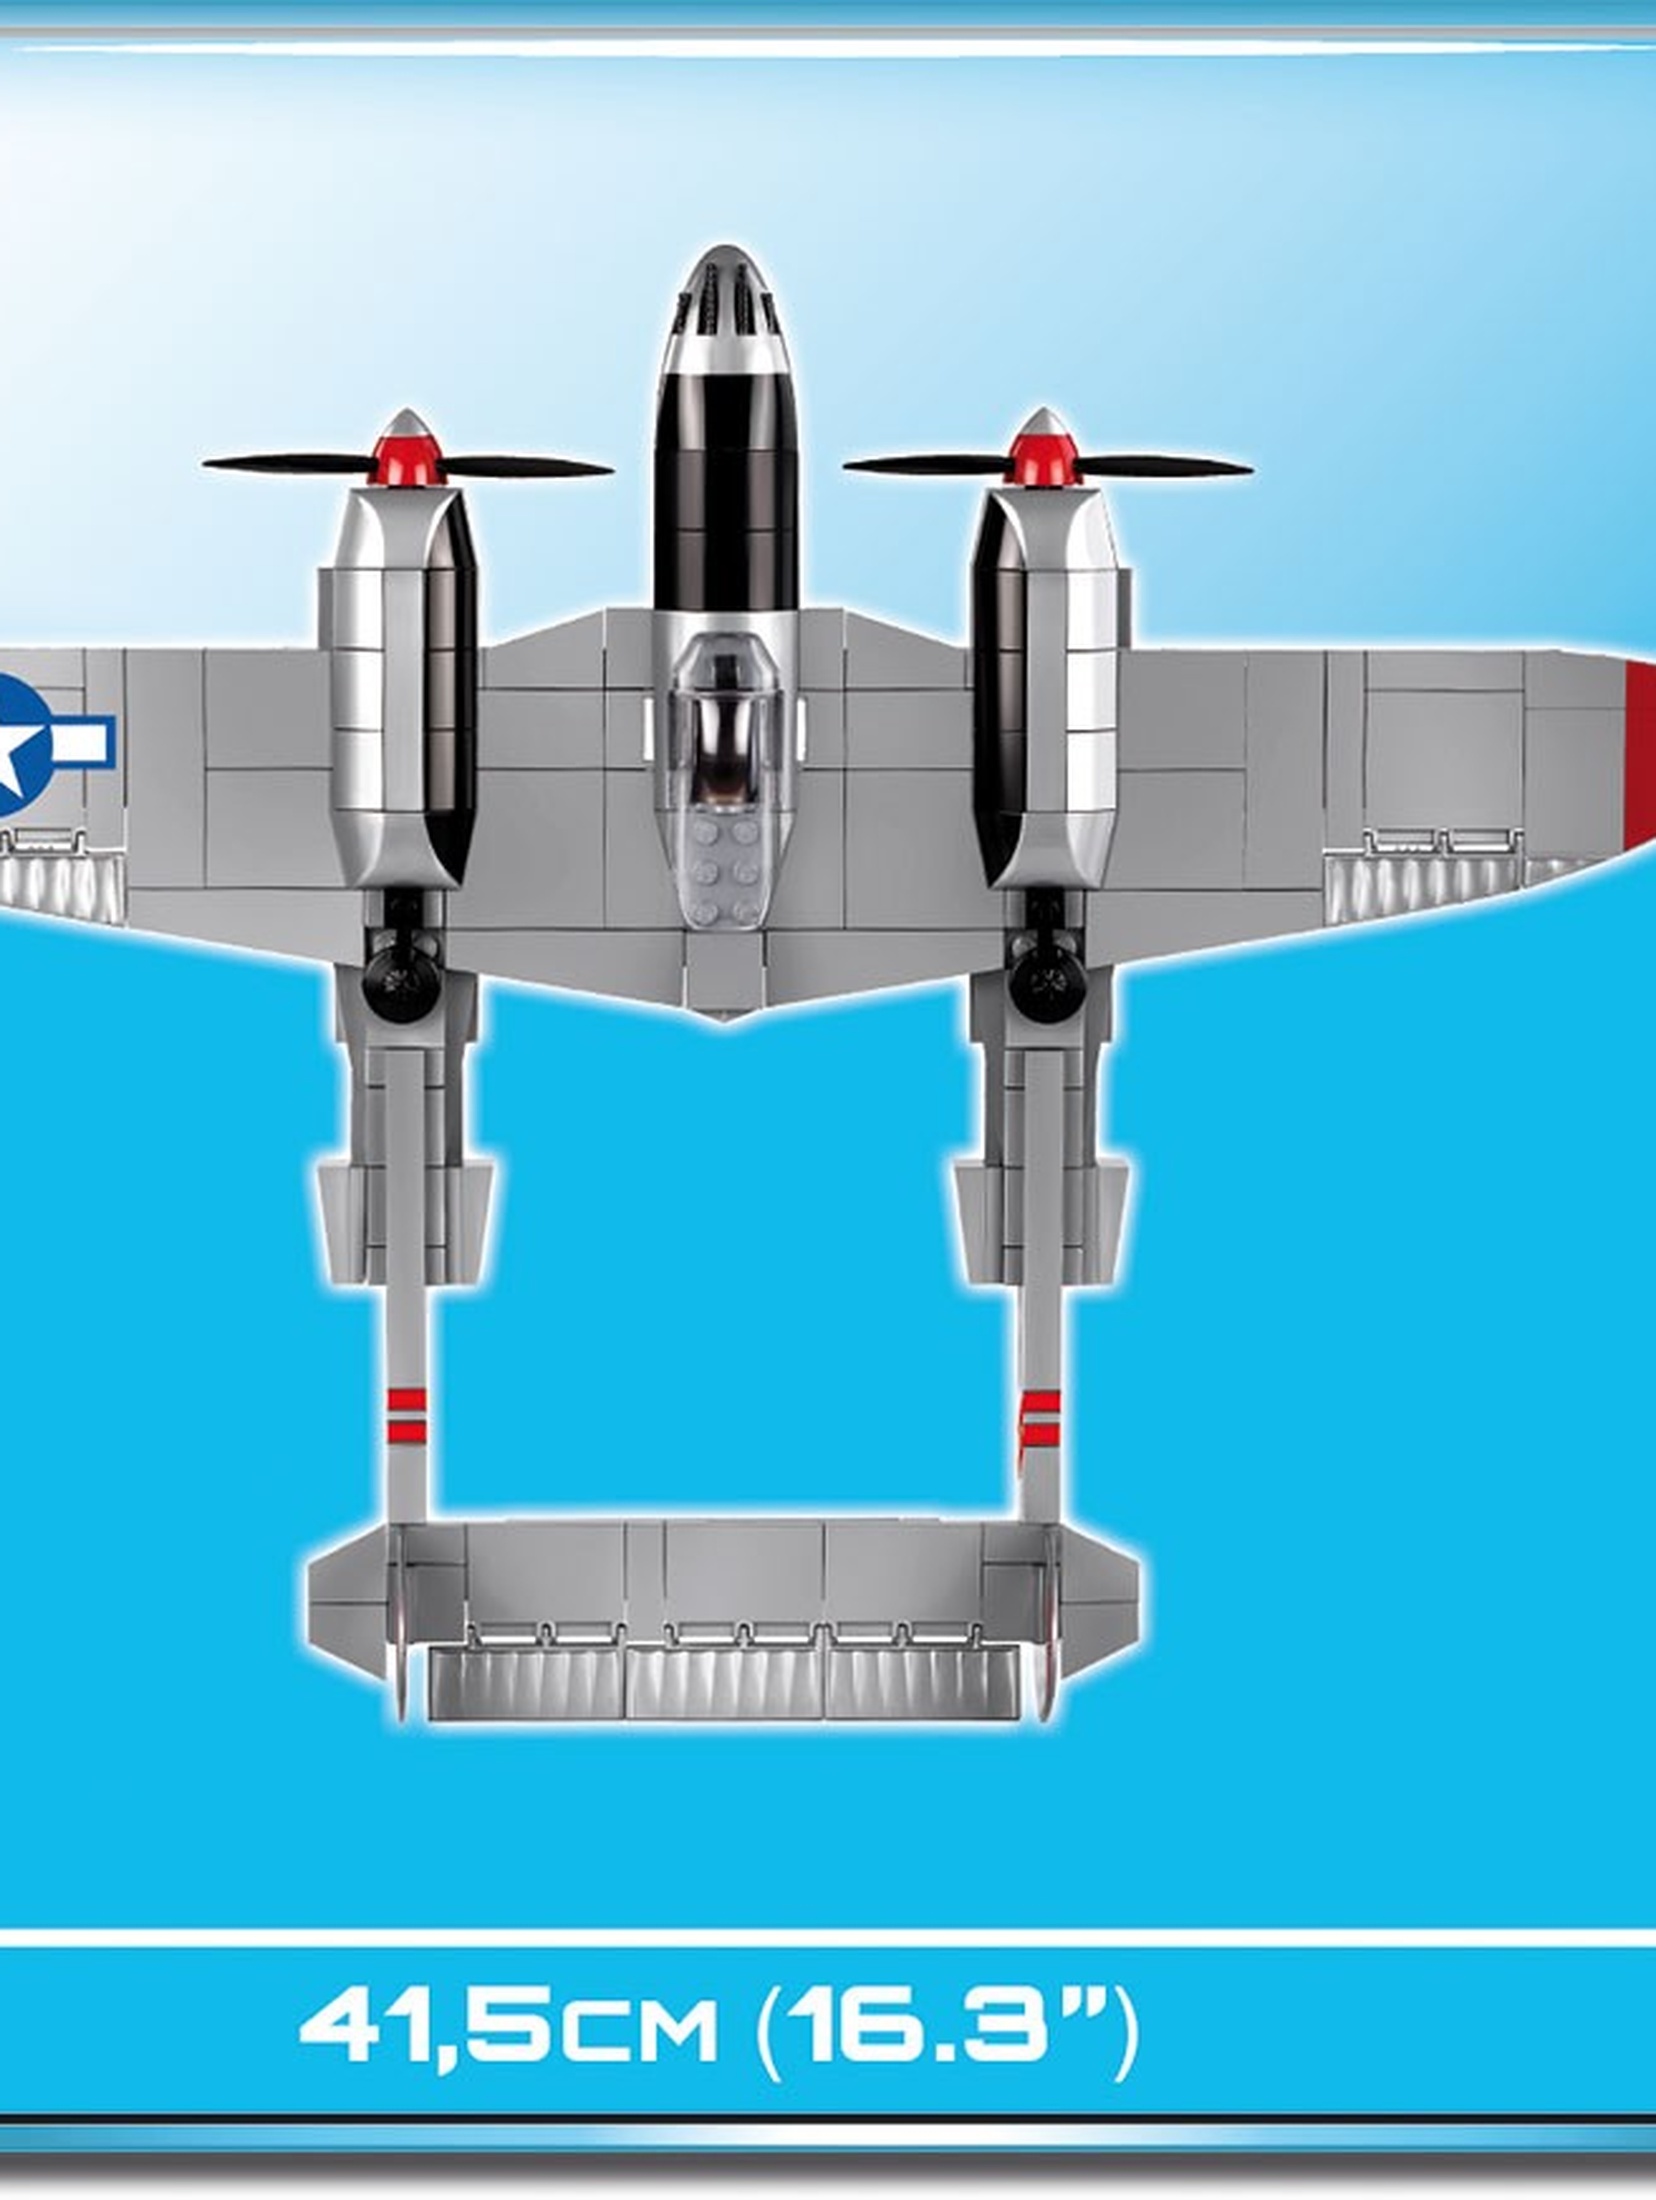 Small Army Lockheed P-38 Lightning